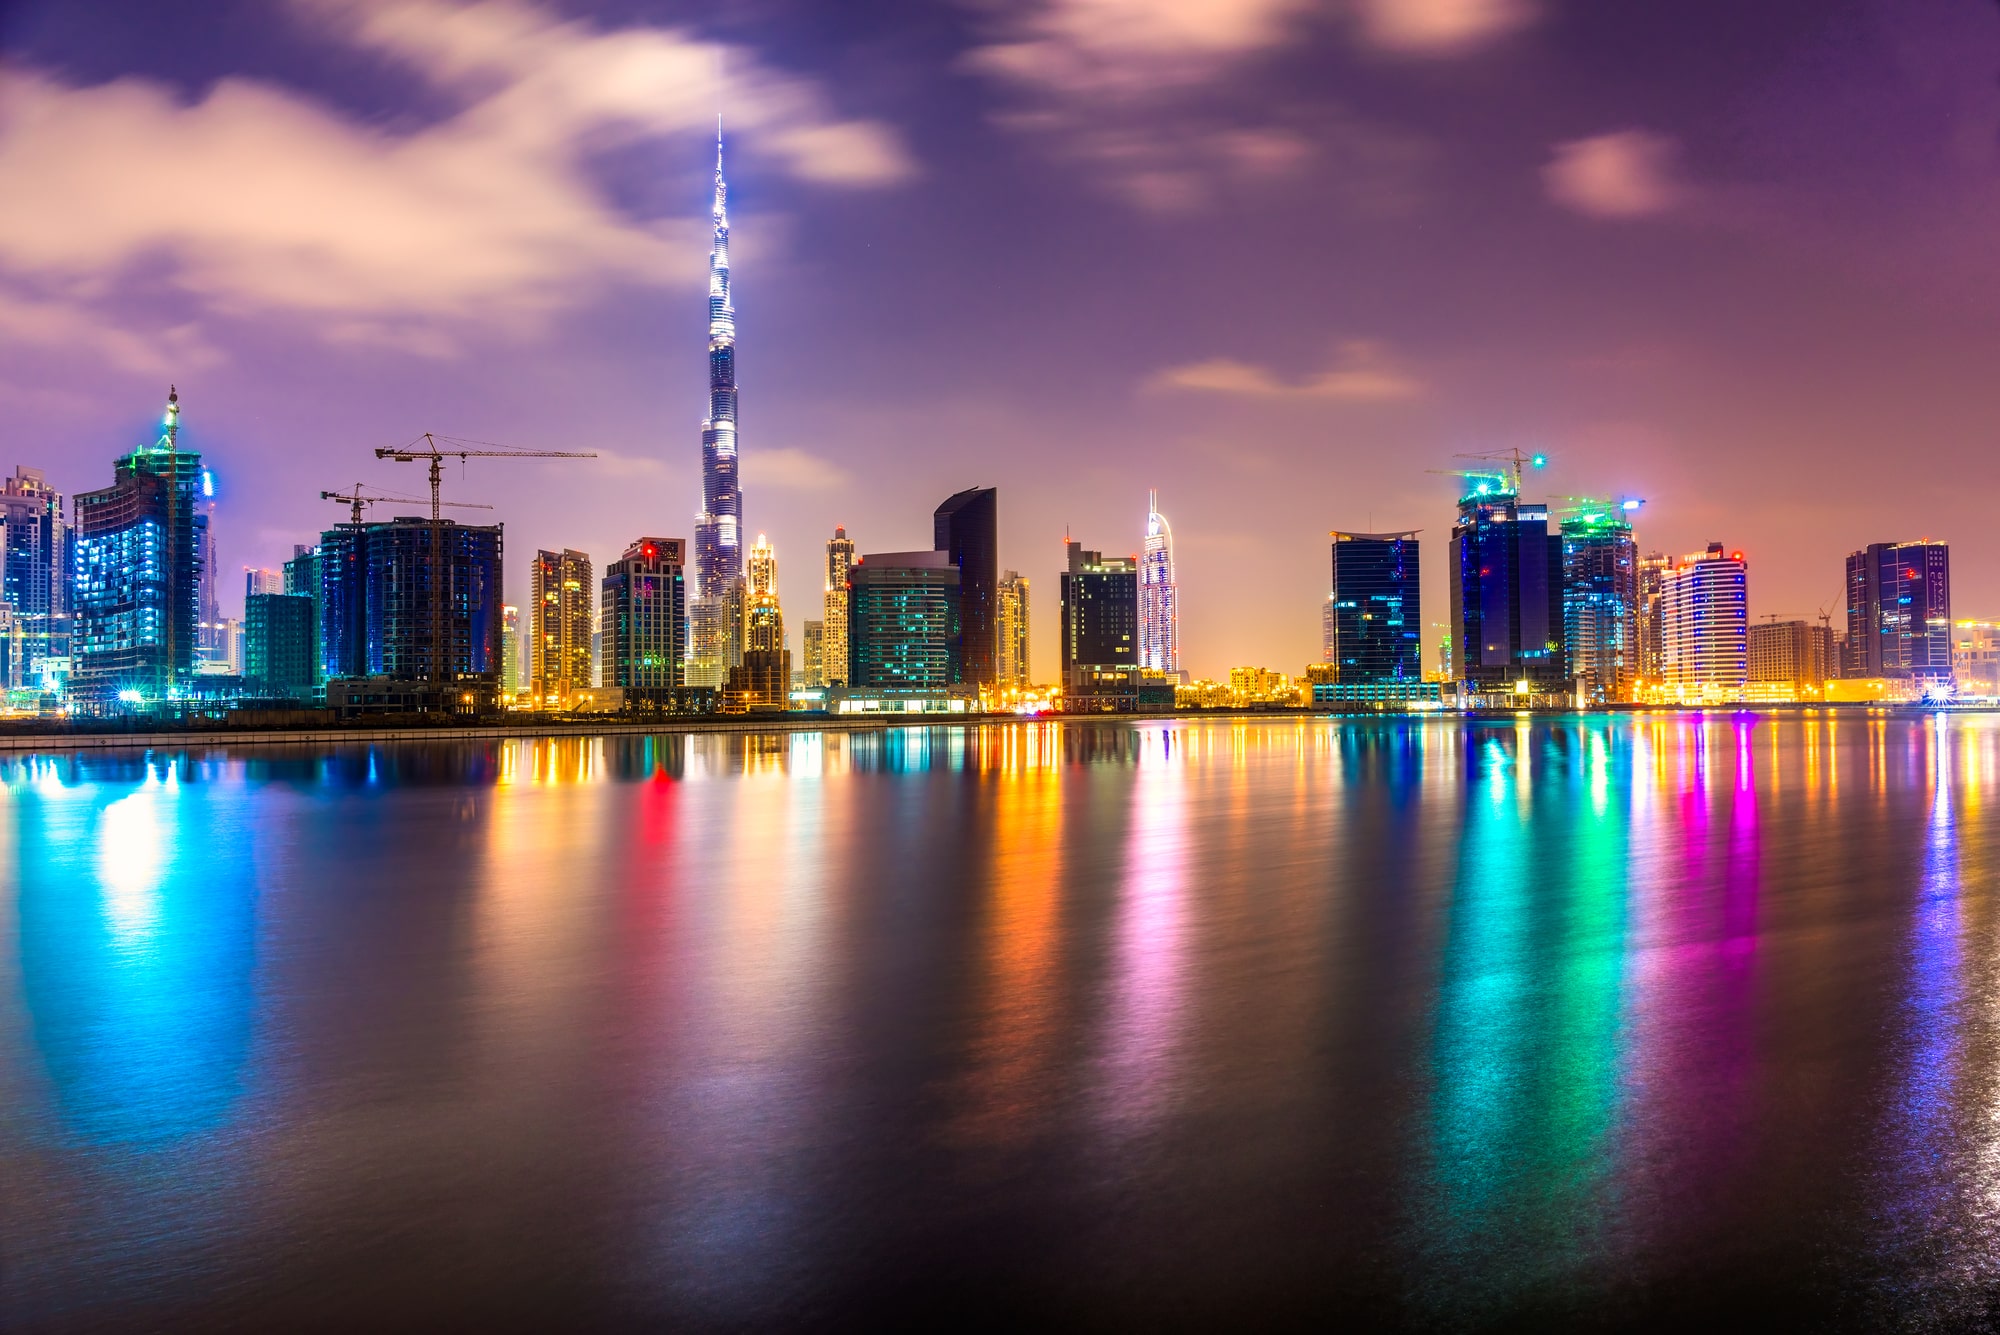 Digital transformation has changed consumer behavior in the UAE